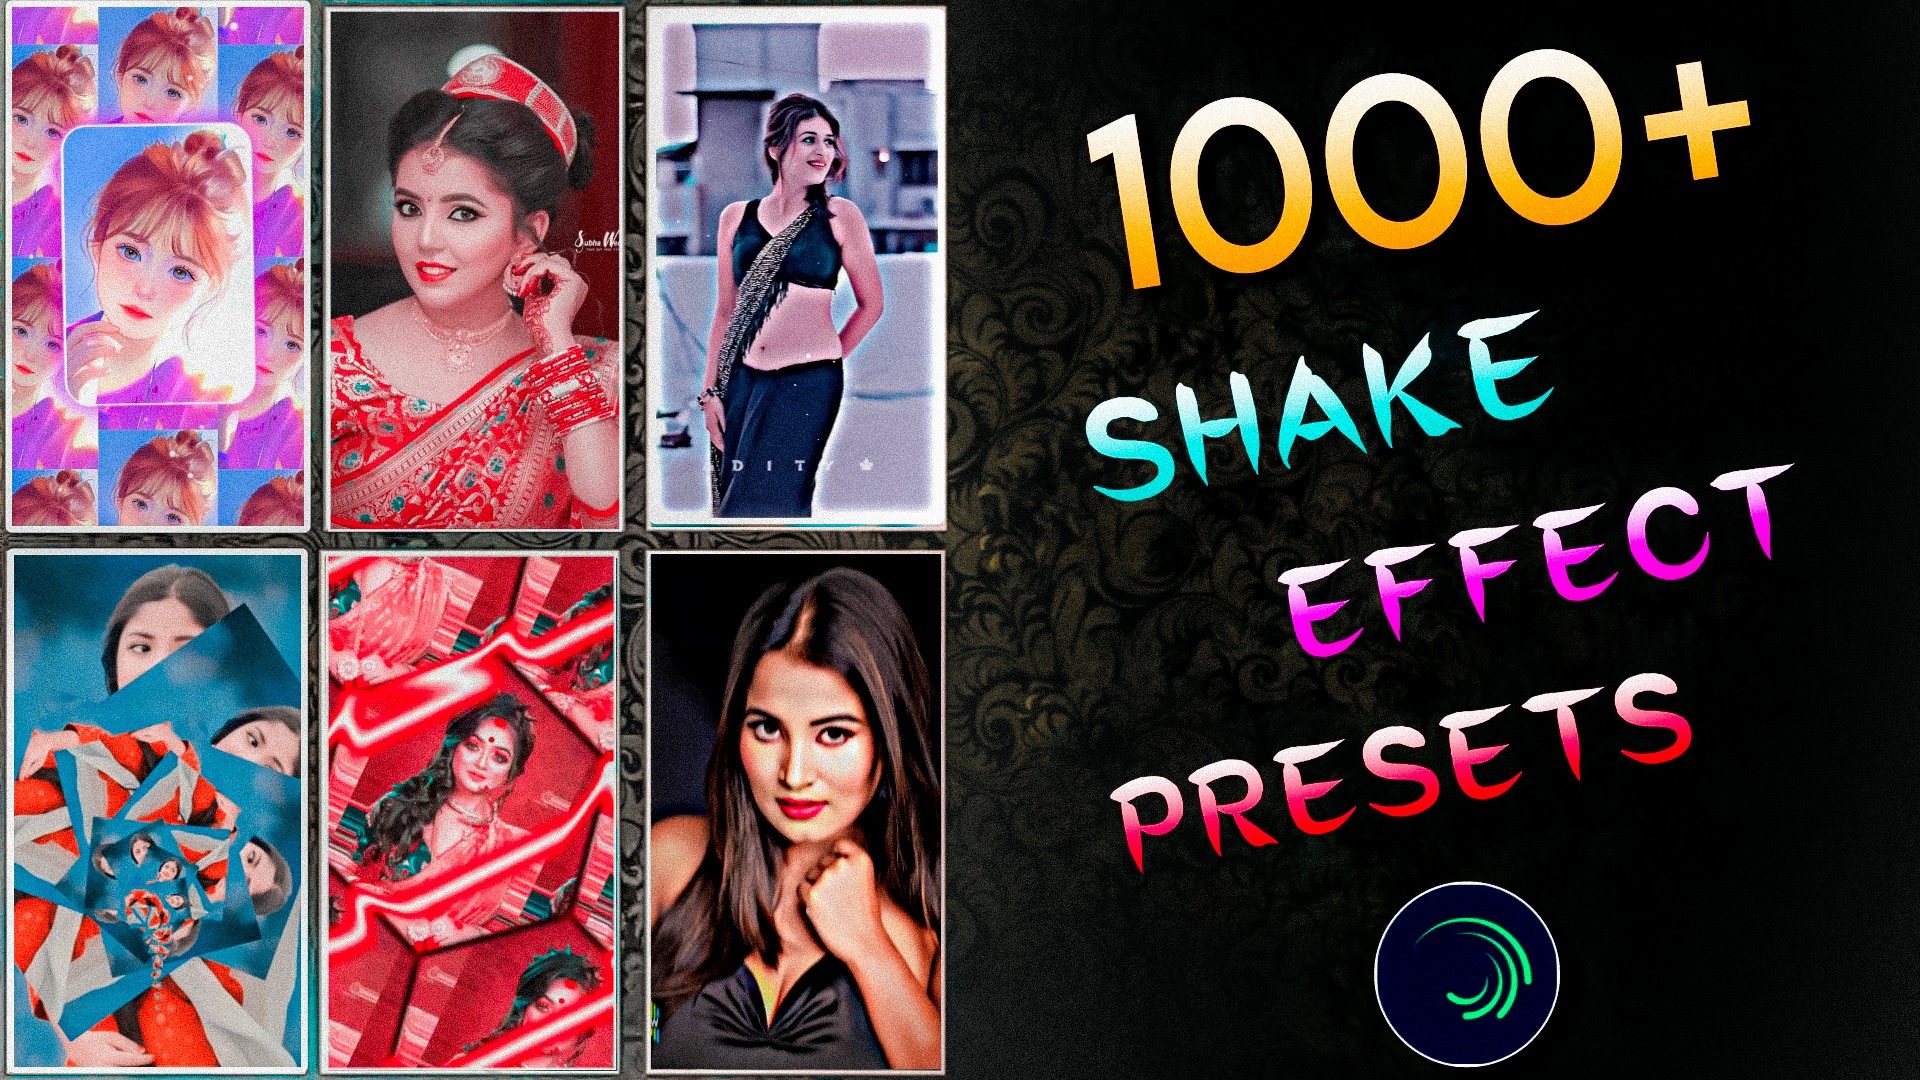 1000+ Alight motion shake effect presets